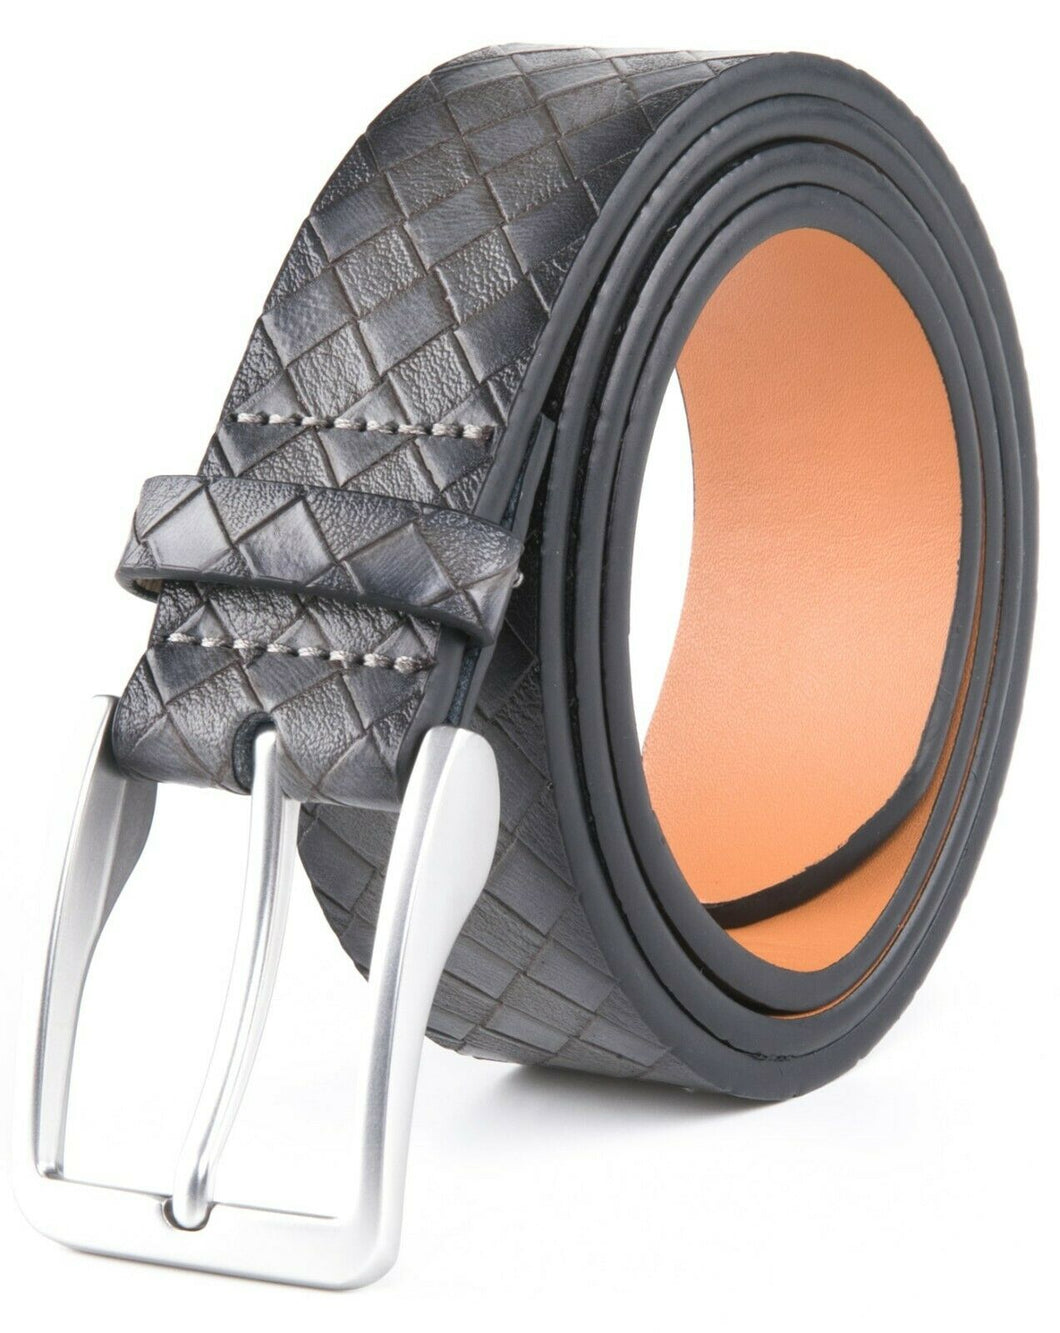 Genuine Leather Belts For Men Dress Belt for Mens High End Many Colors & Sizes